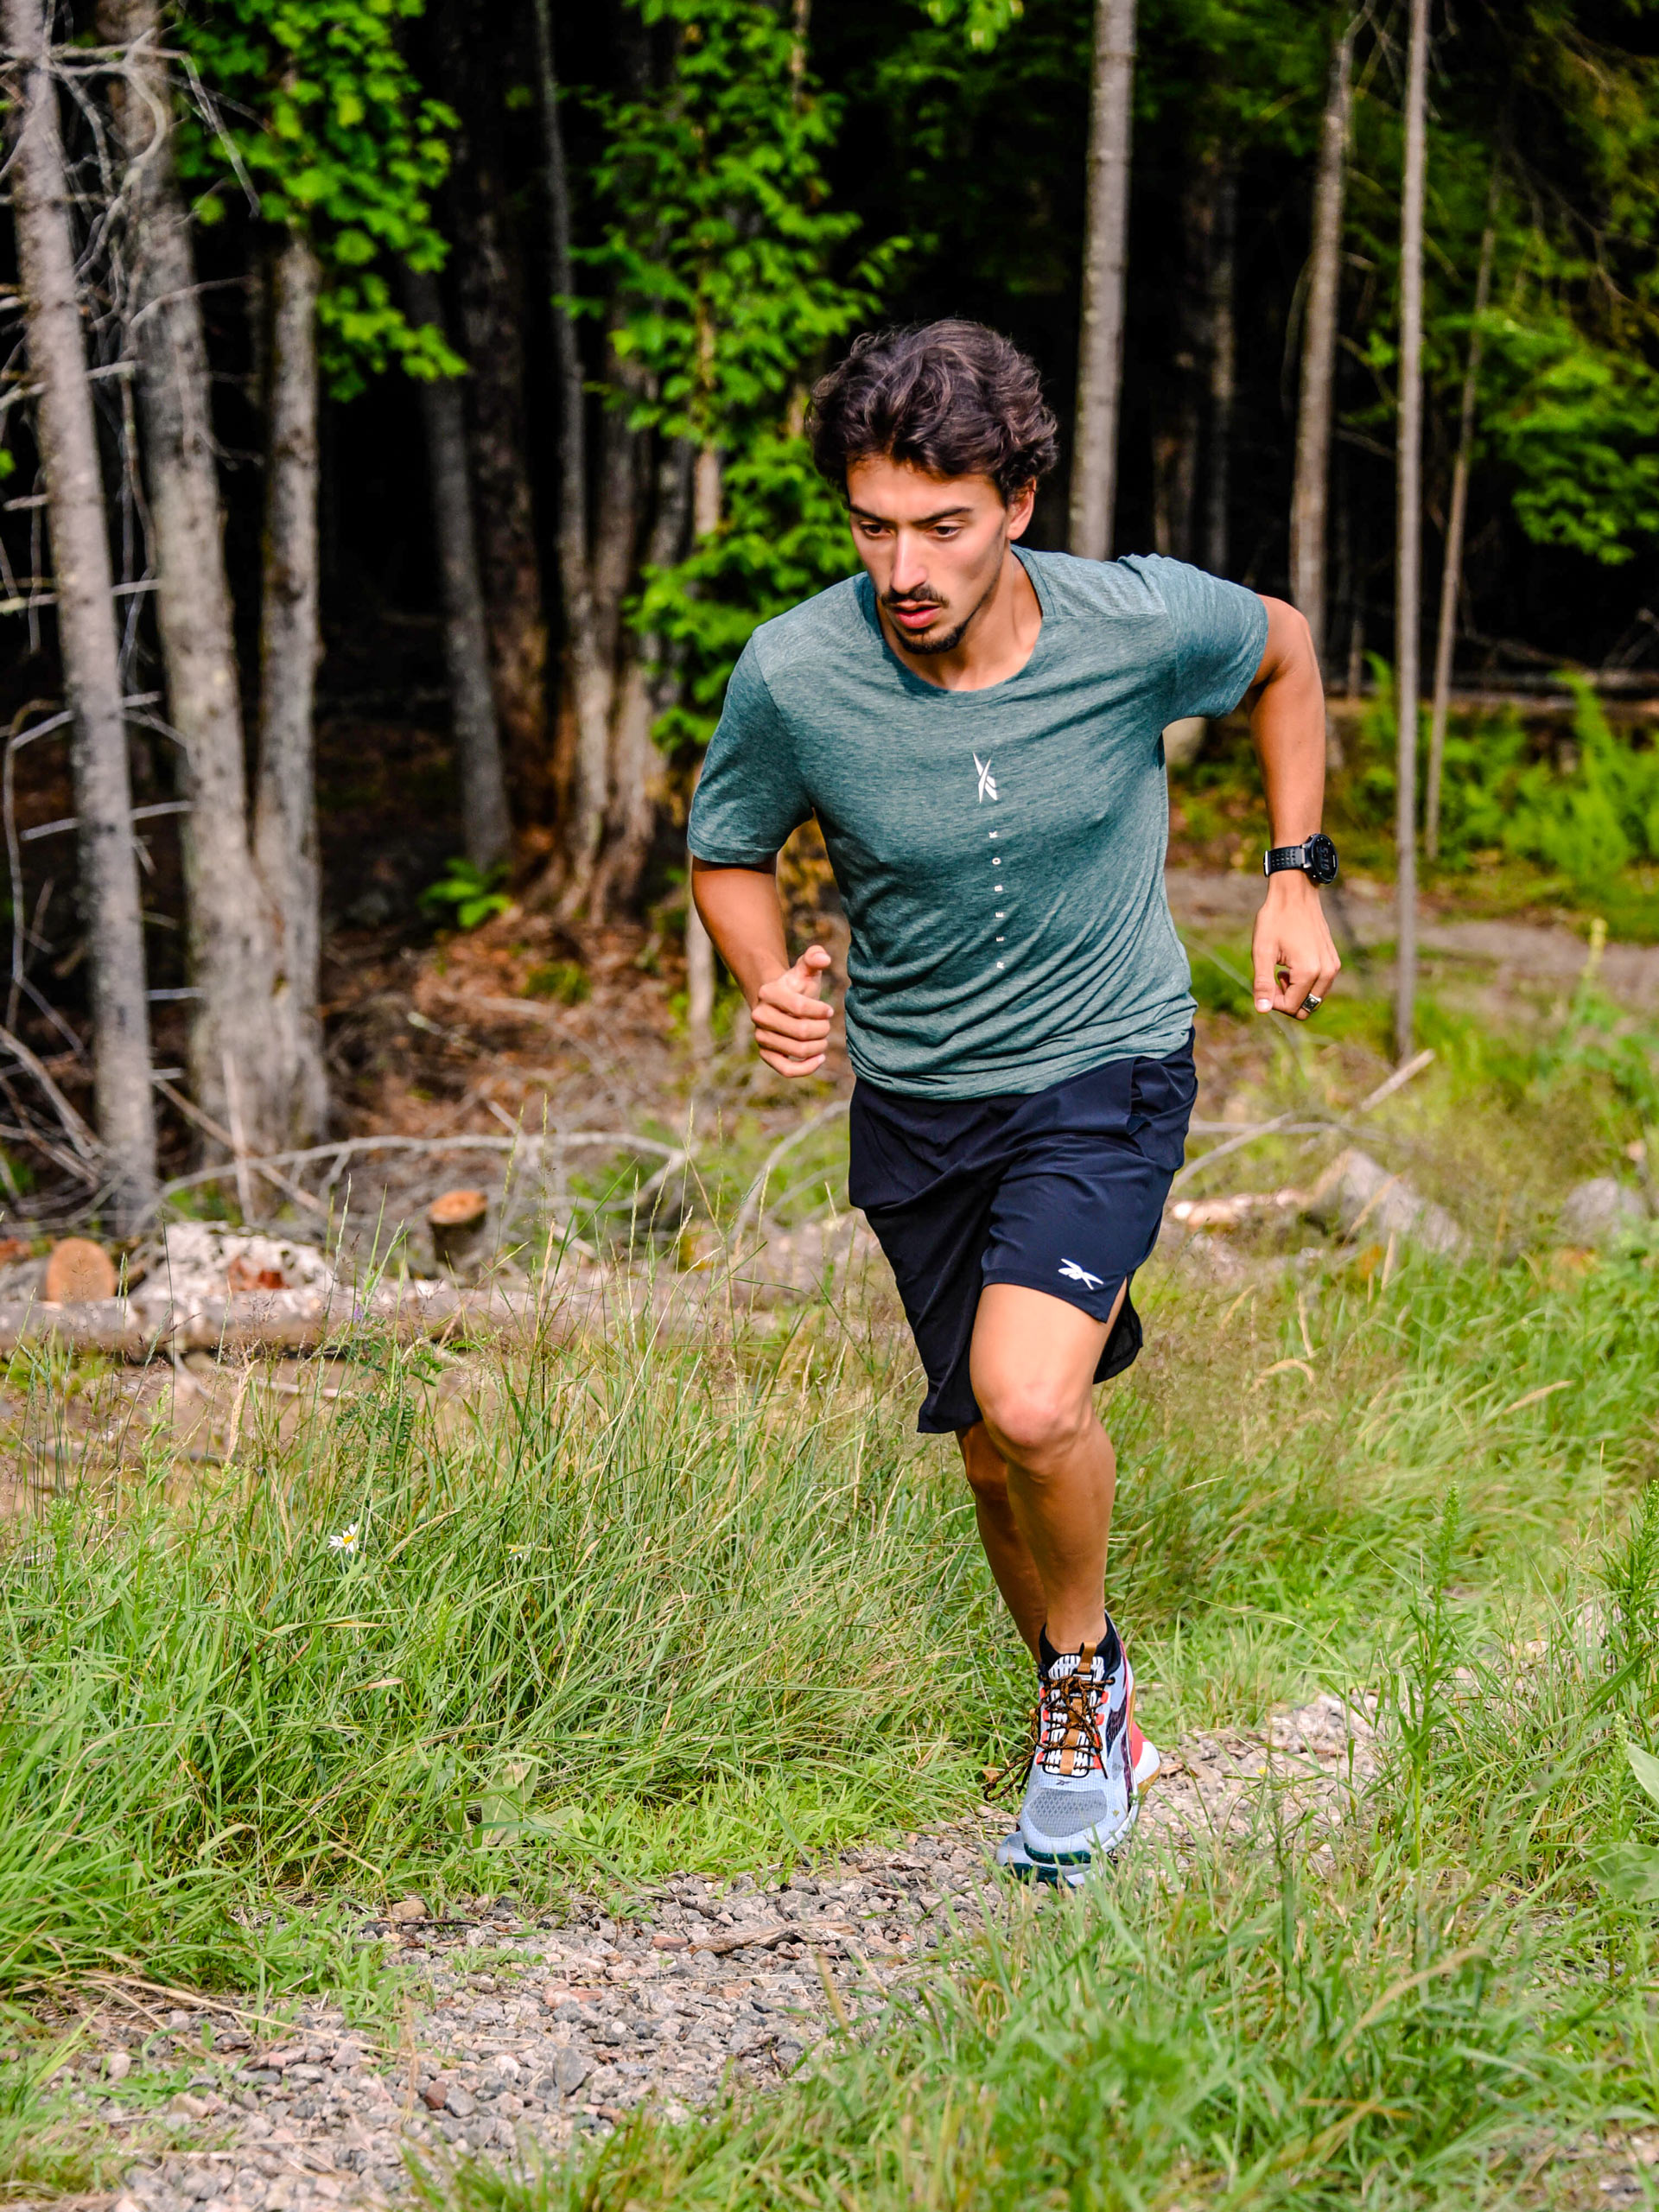 Jacob running near Montreal, Reebok Nano X1 Adventure trail runner in action